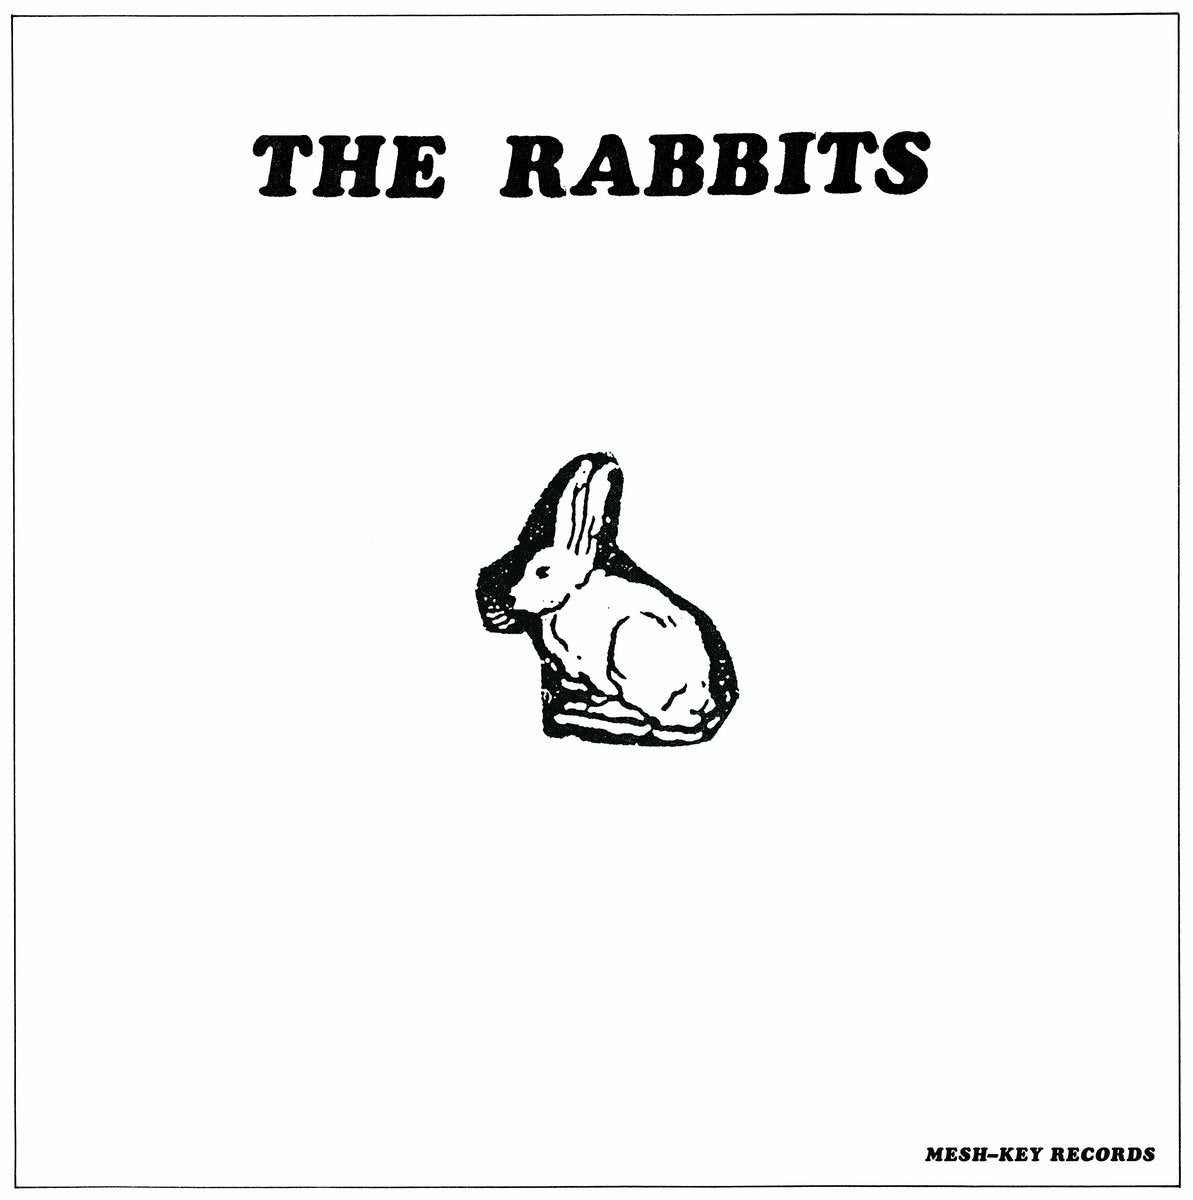 THE RABBITS - "THE RABBITS" LP